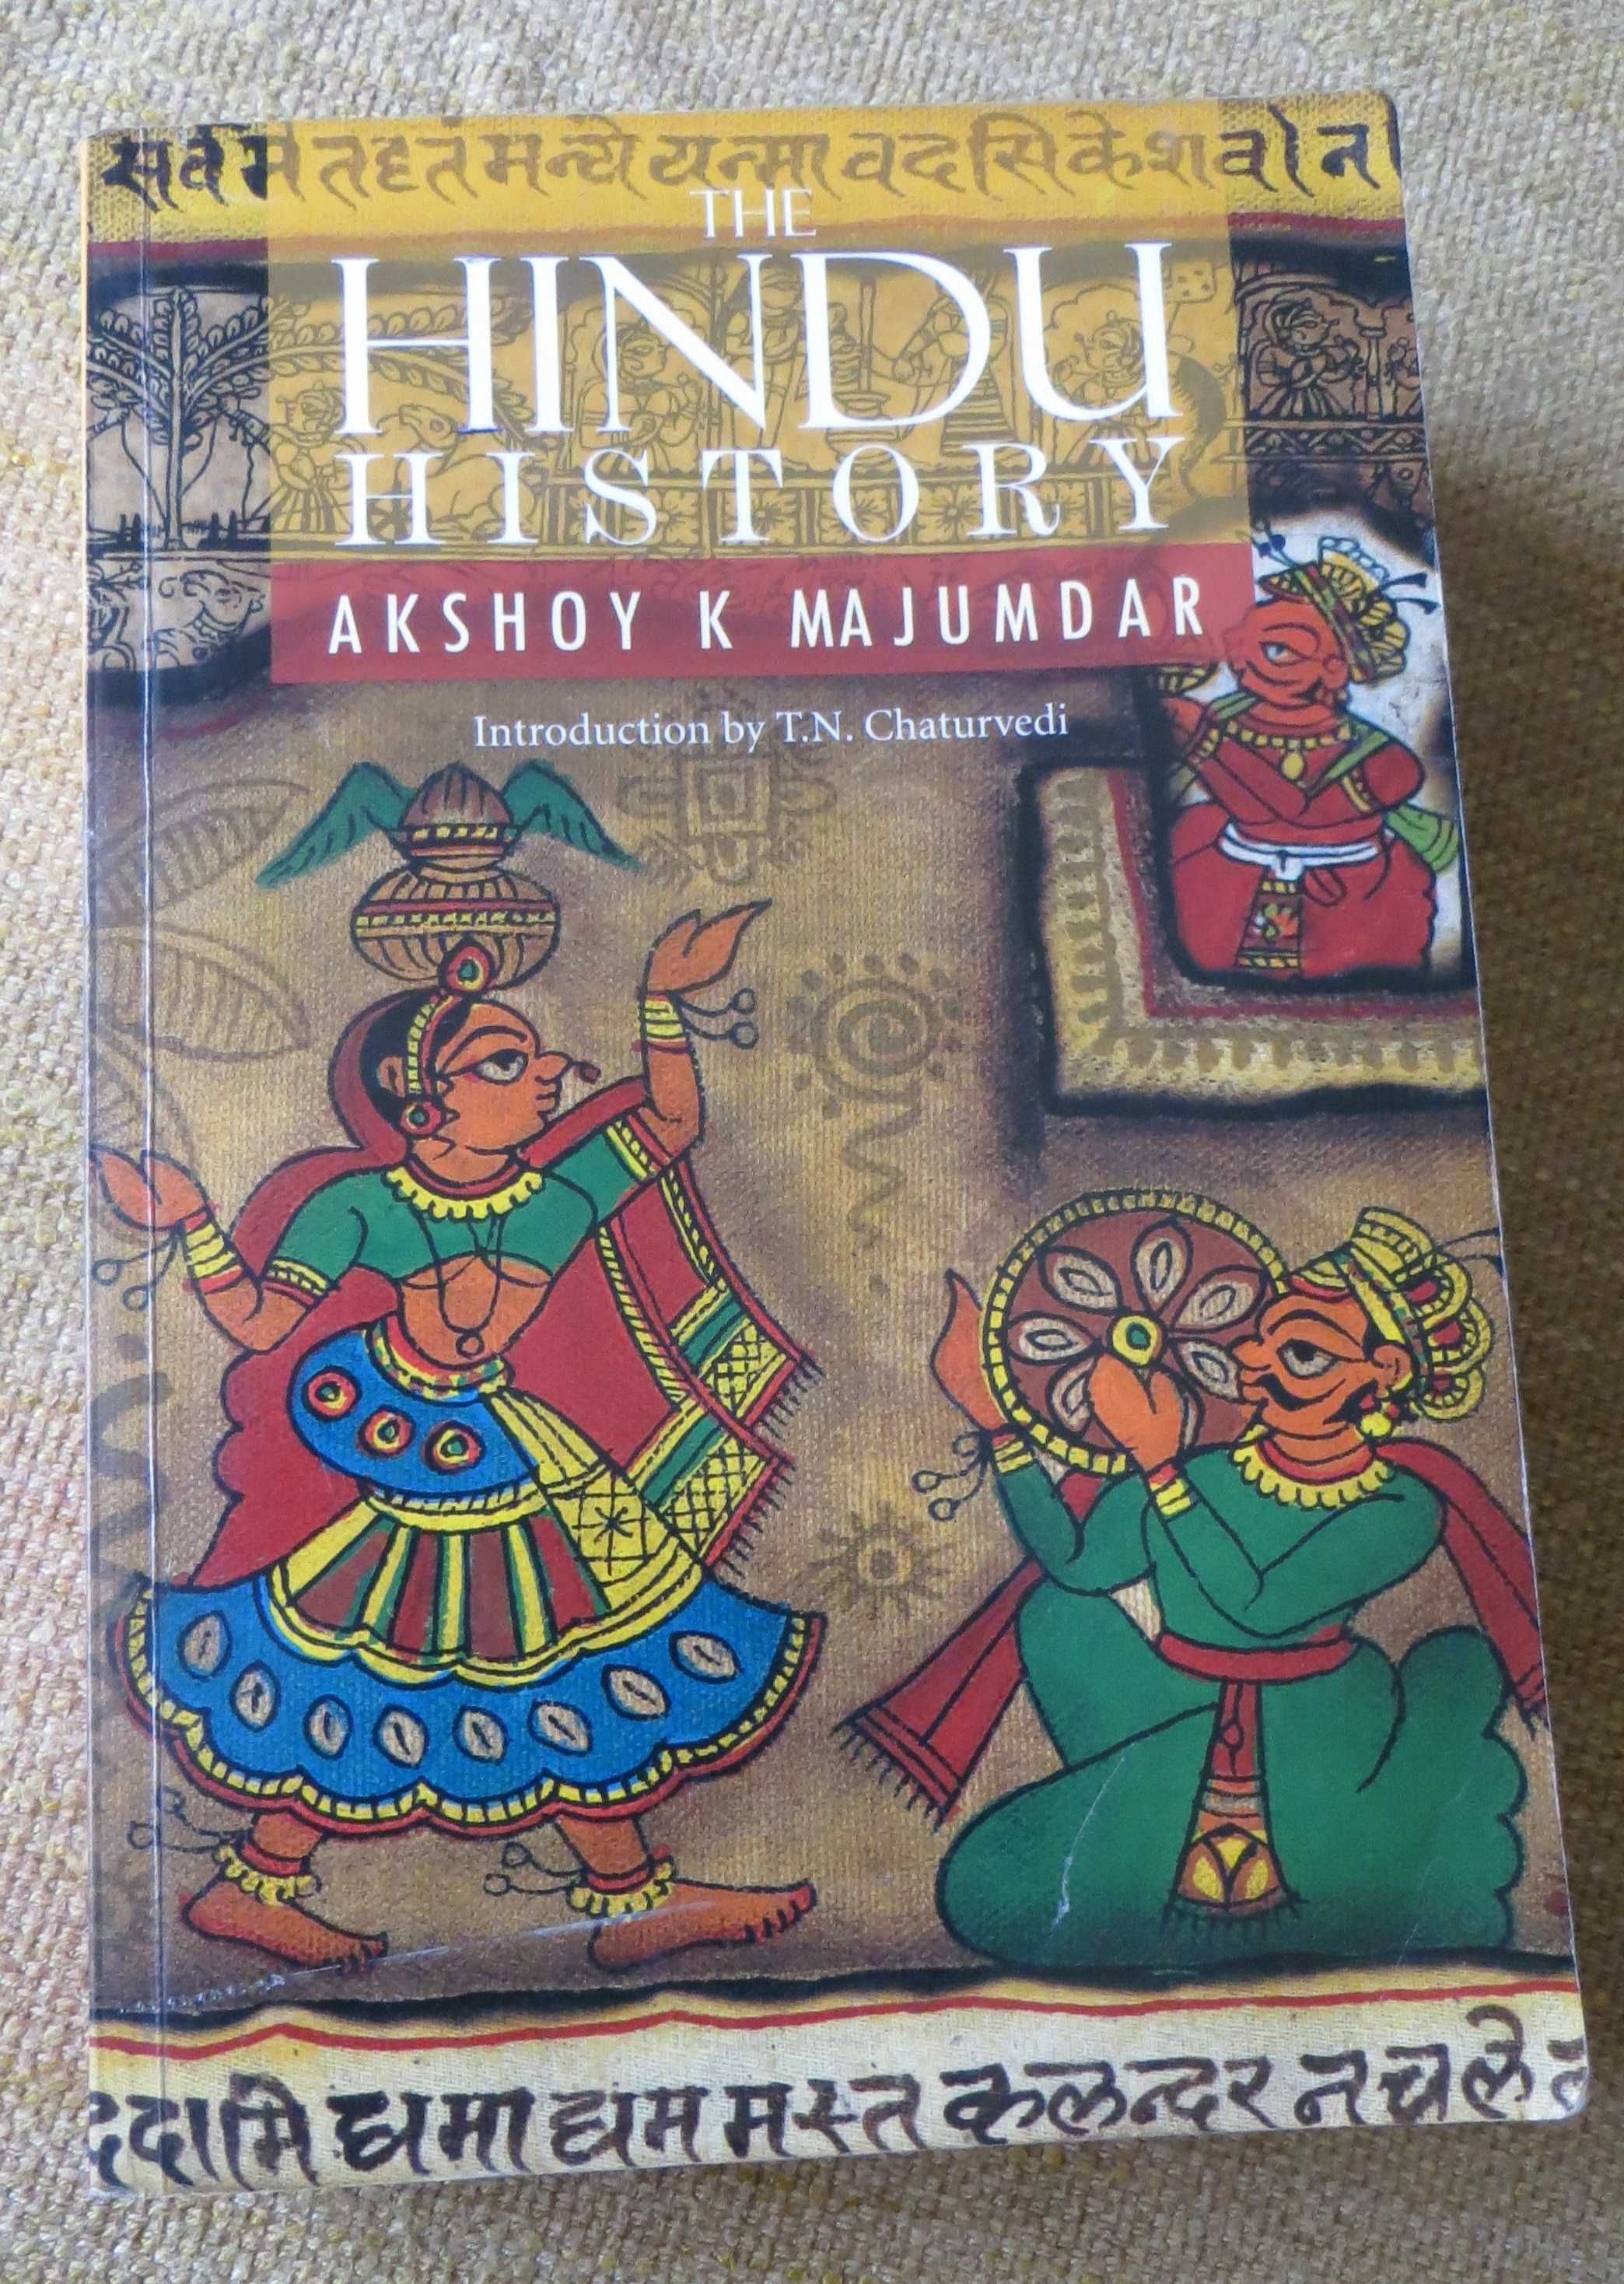 Livro The Hindu History A história tribo Hindu  Idioma: Inglês 275 Pág